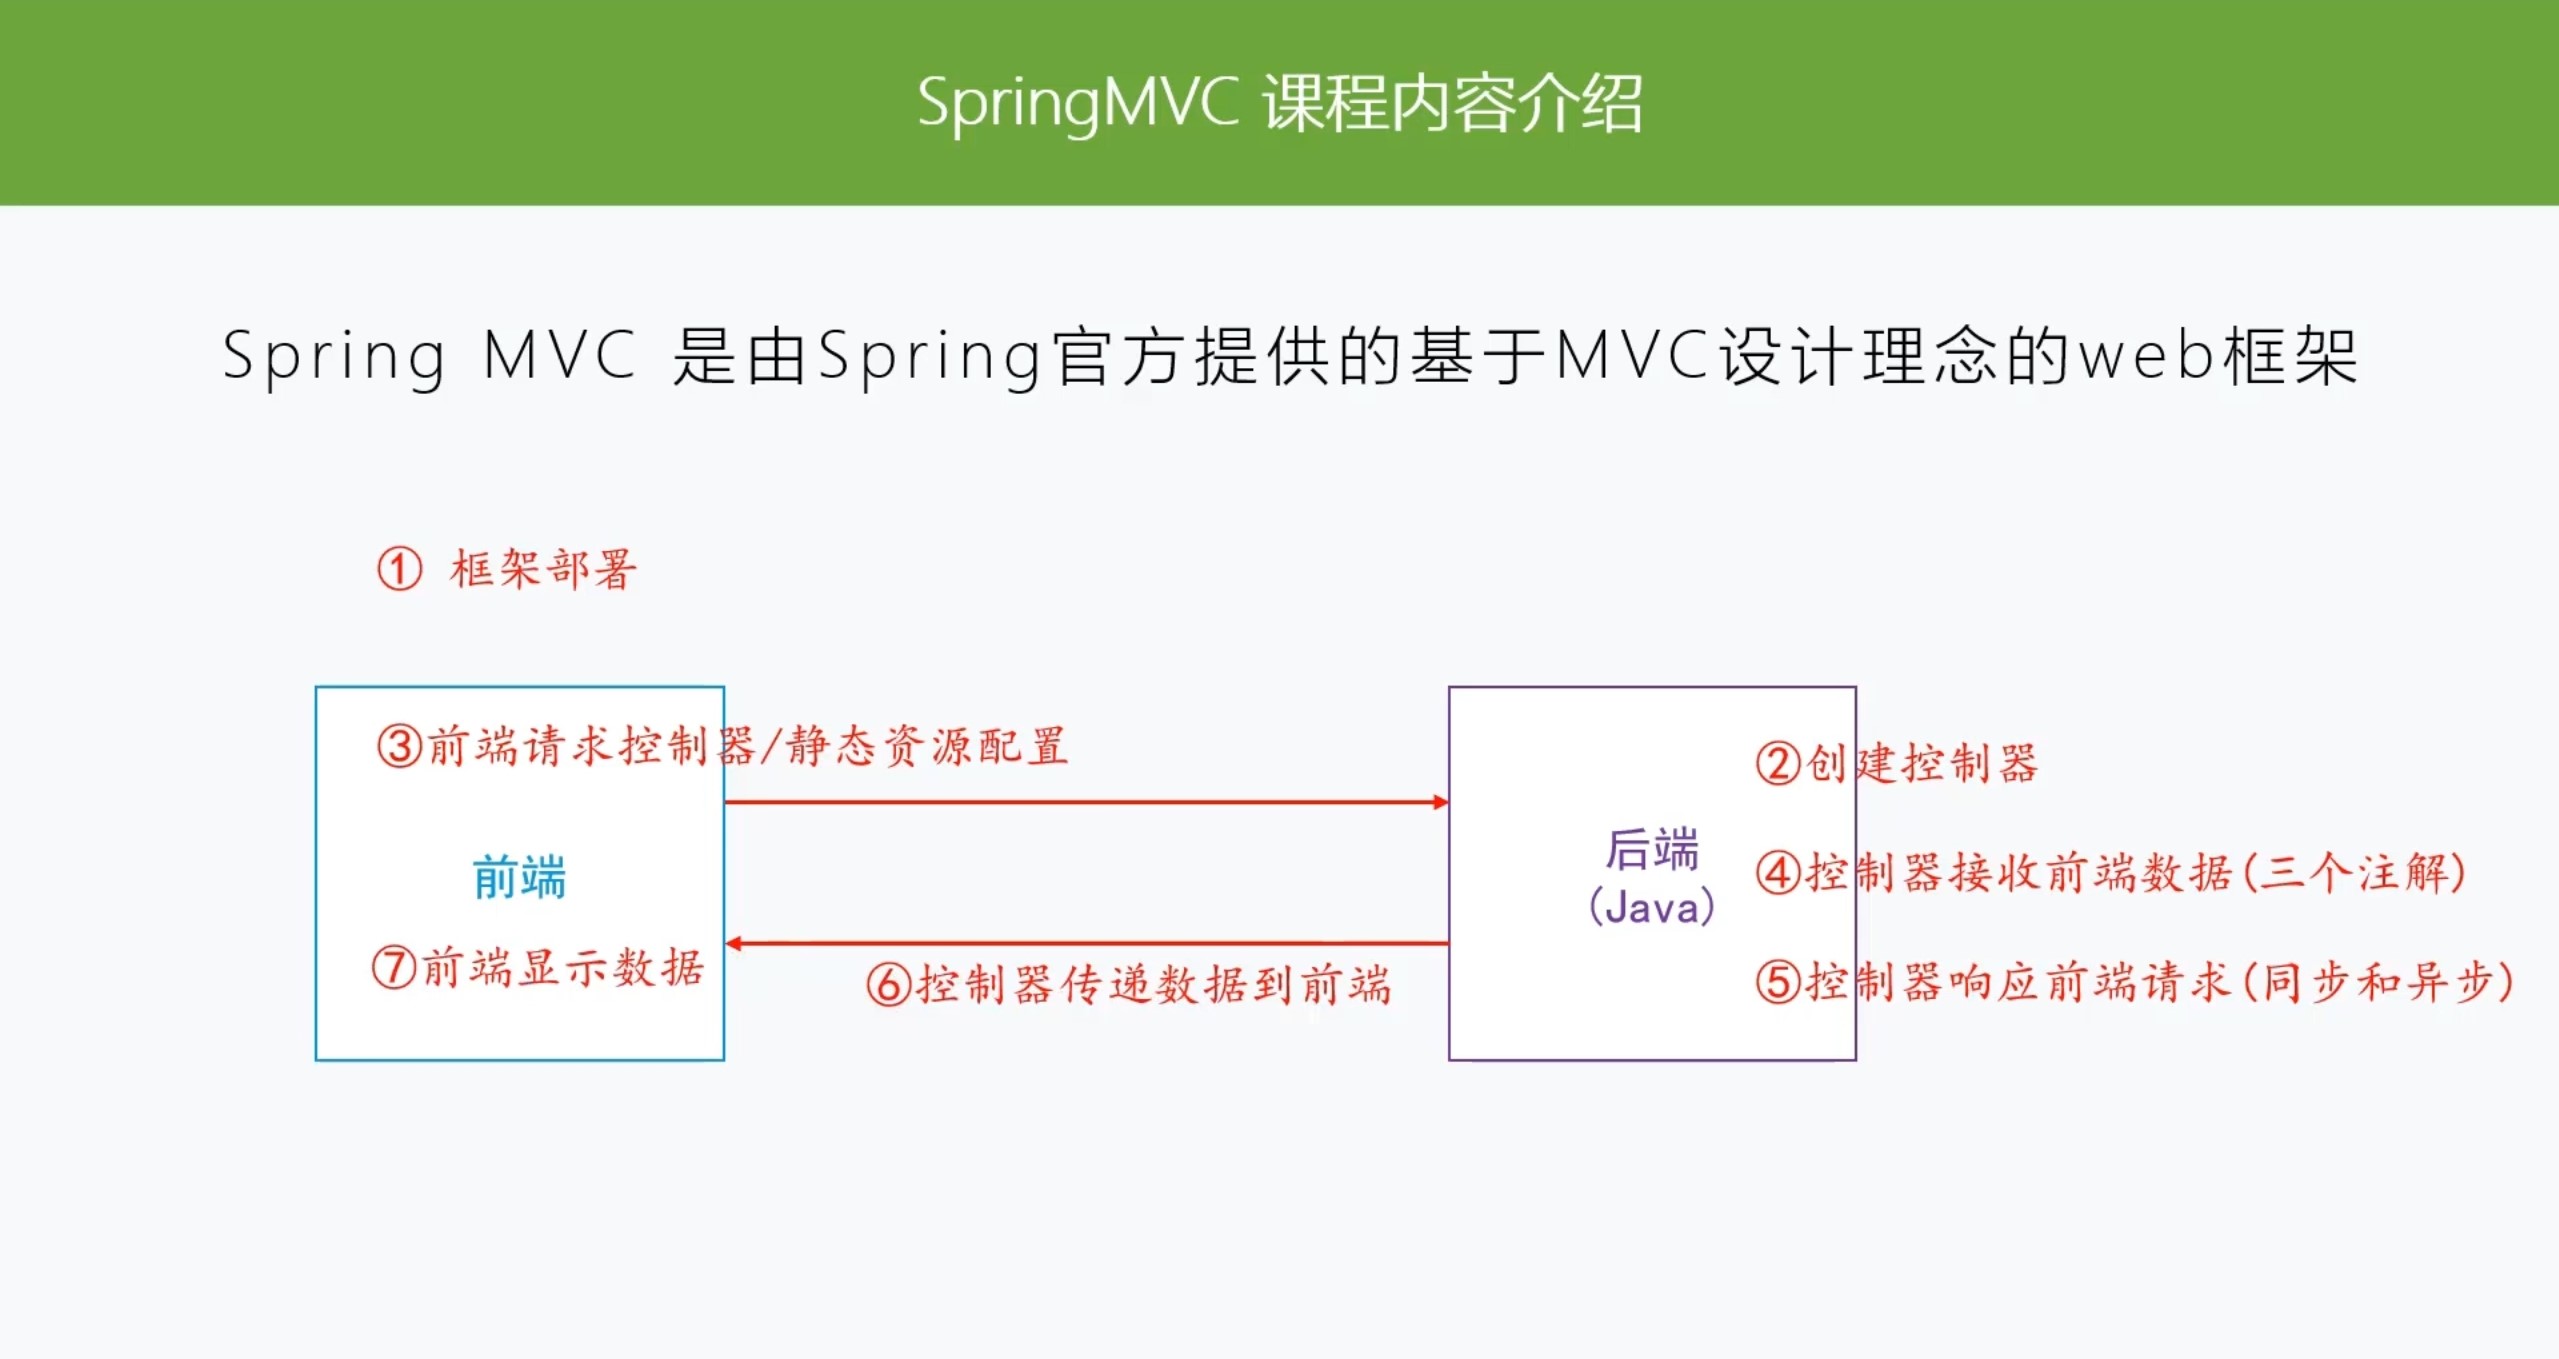 6、SpringMVC - 图1